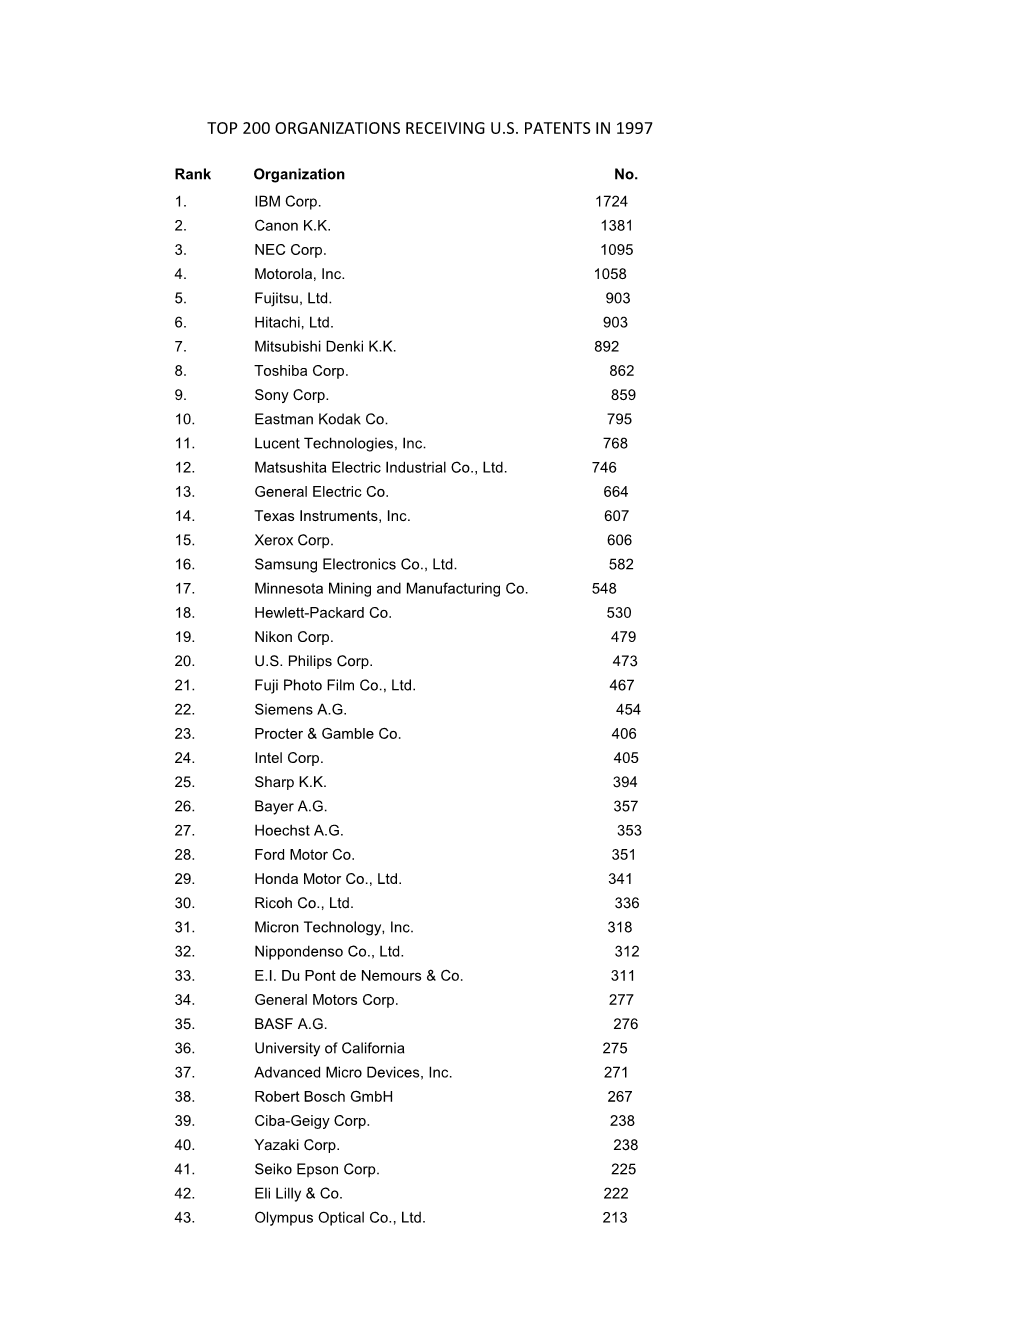 Top 200 Organizations Receiving U.S. Patents in 1997